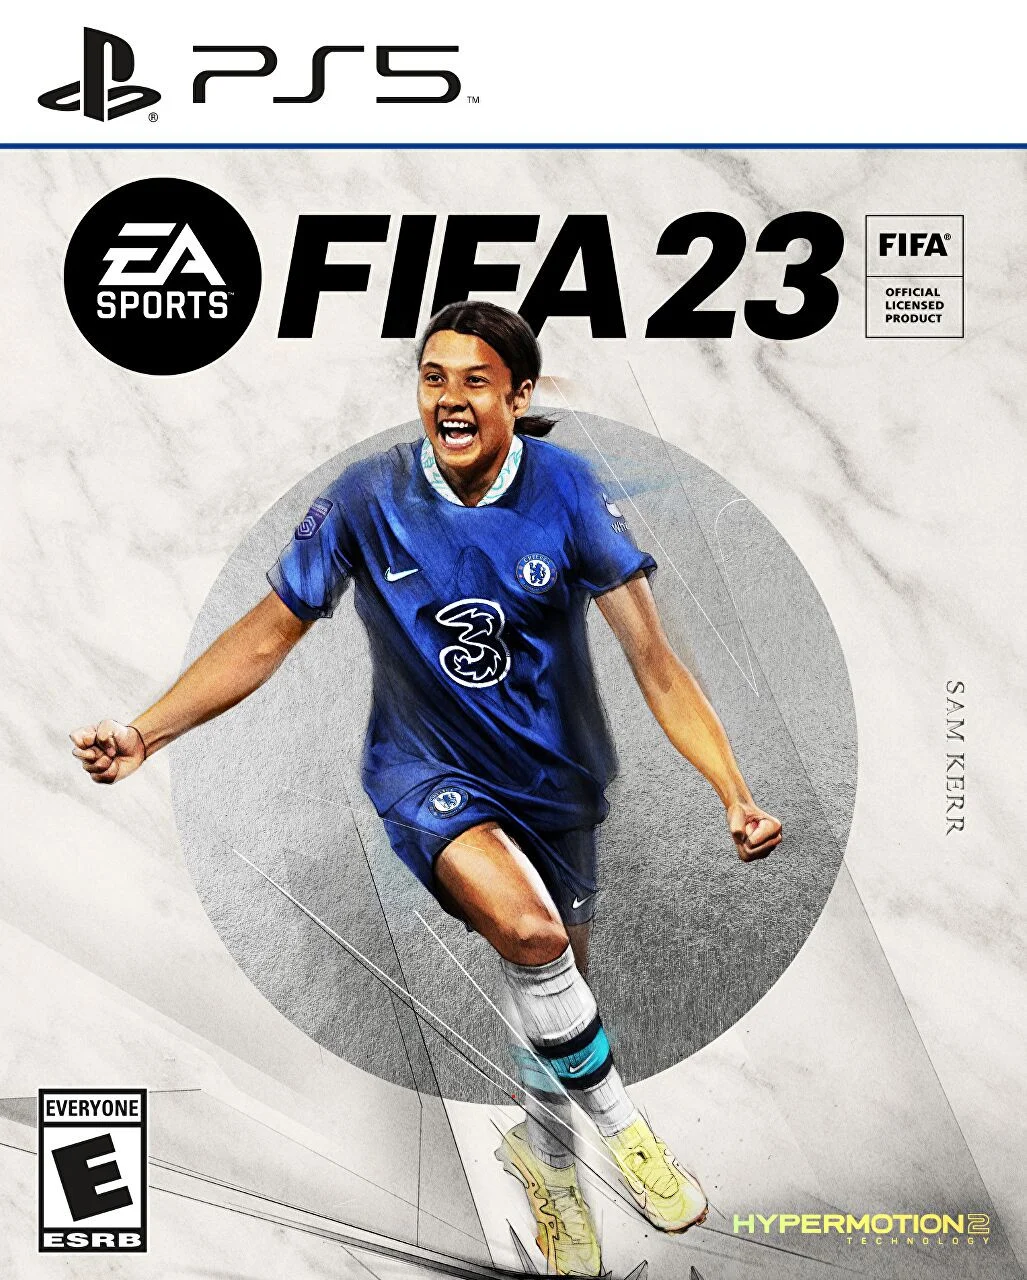 На обложке FIFA 23 появится футболистка Сэм Керр из Chelsea - фото 1